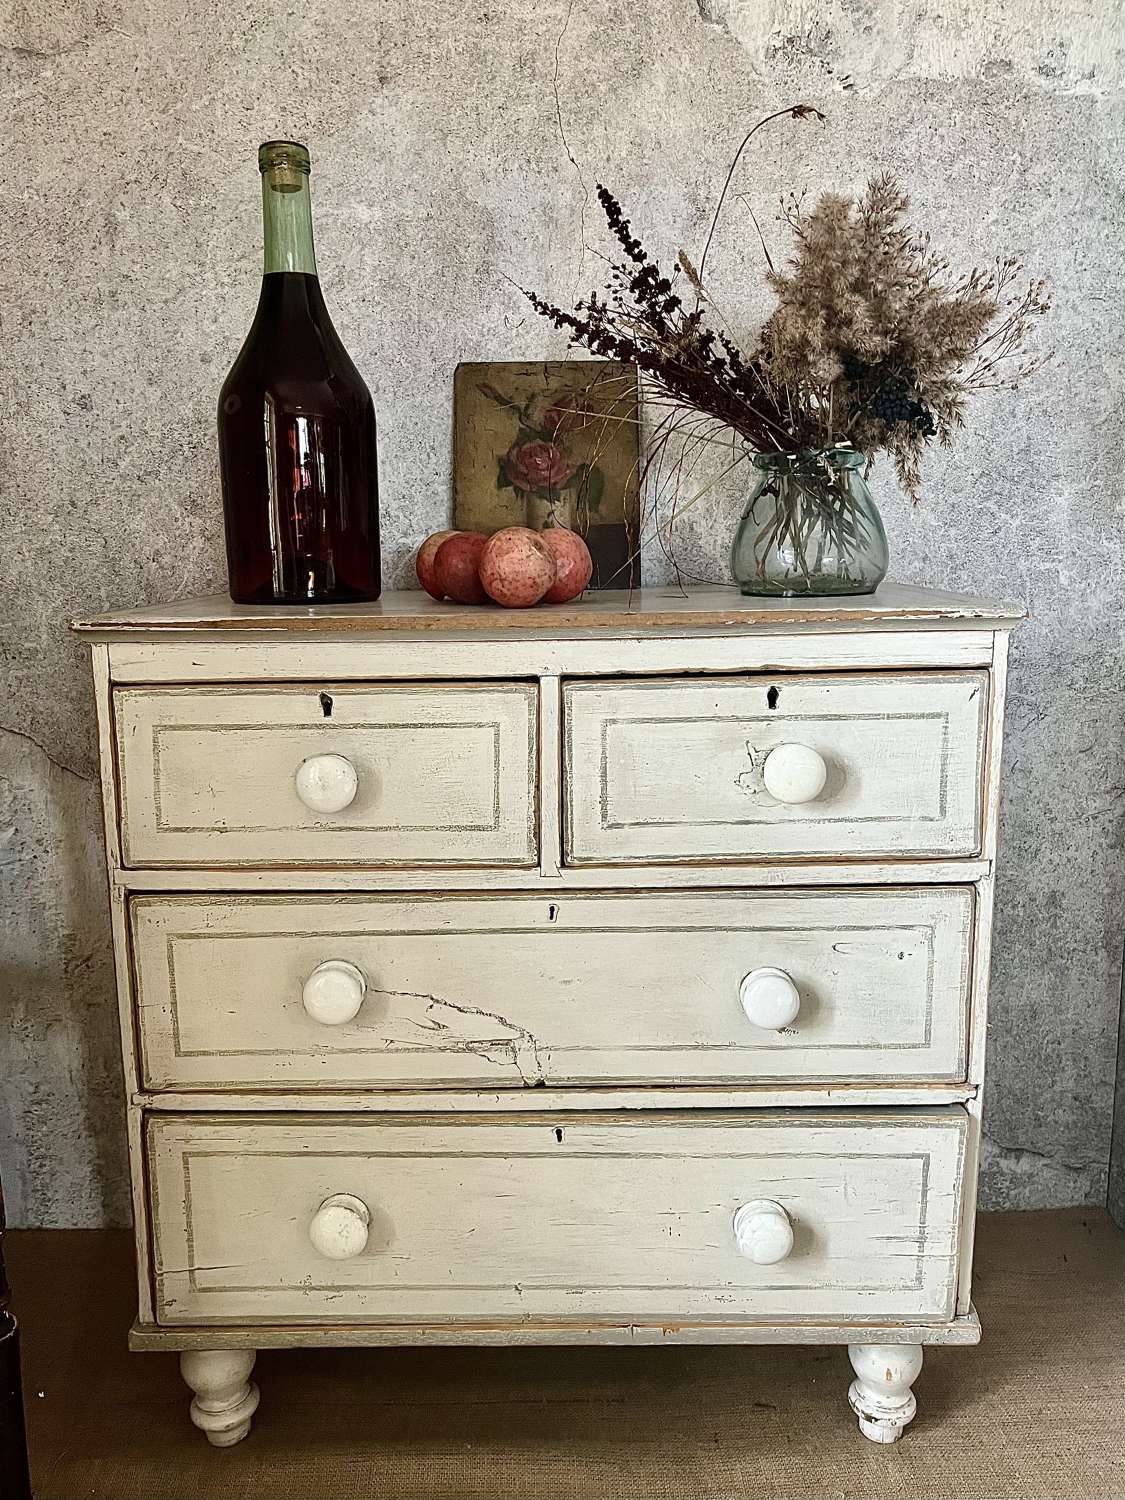 White 19th century pine chest of drawers